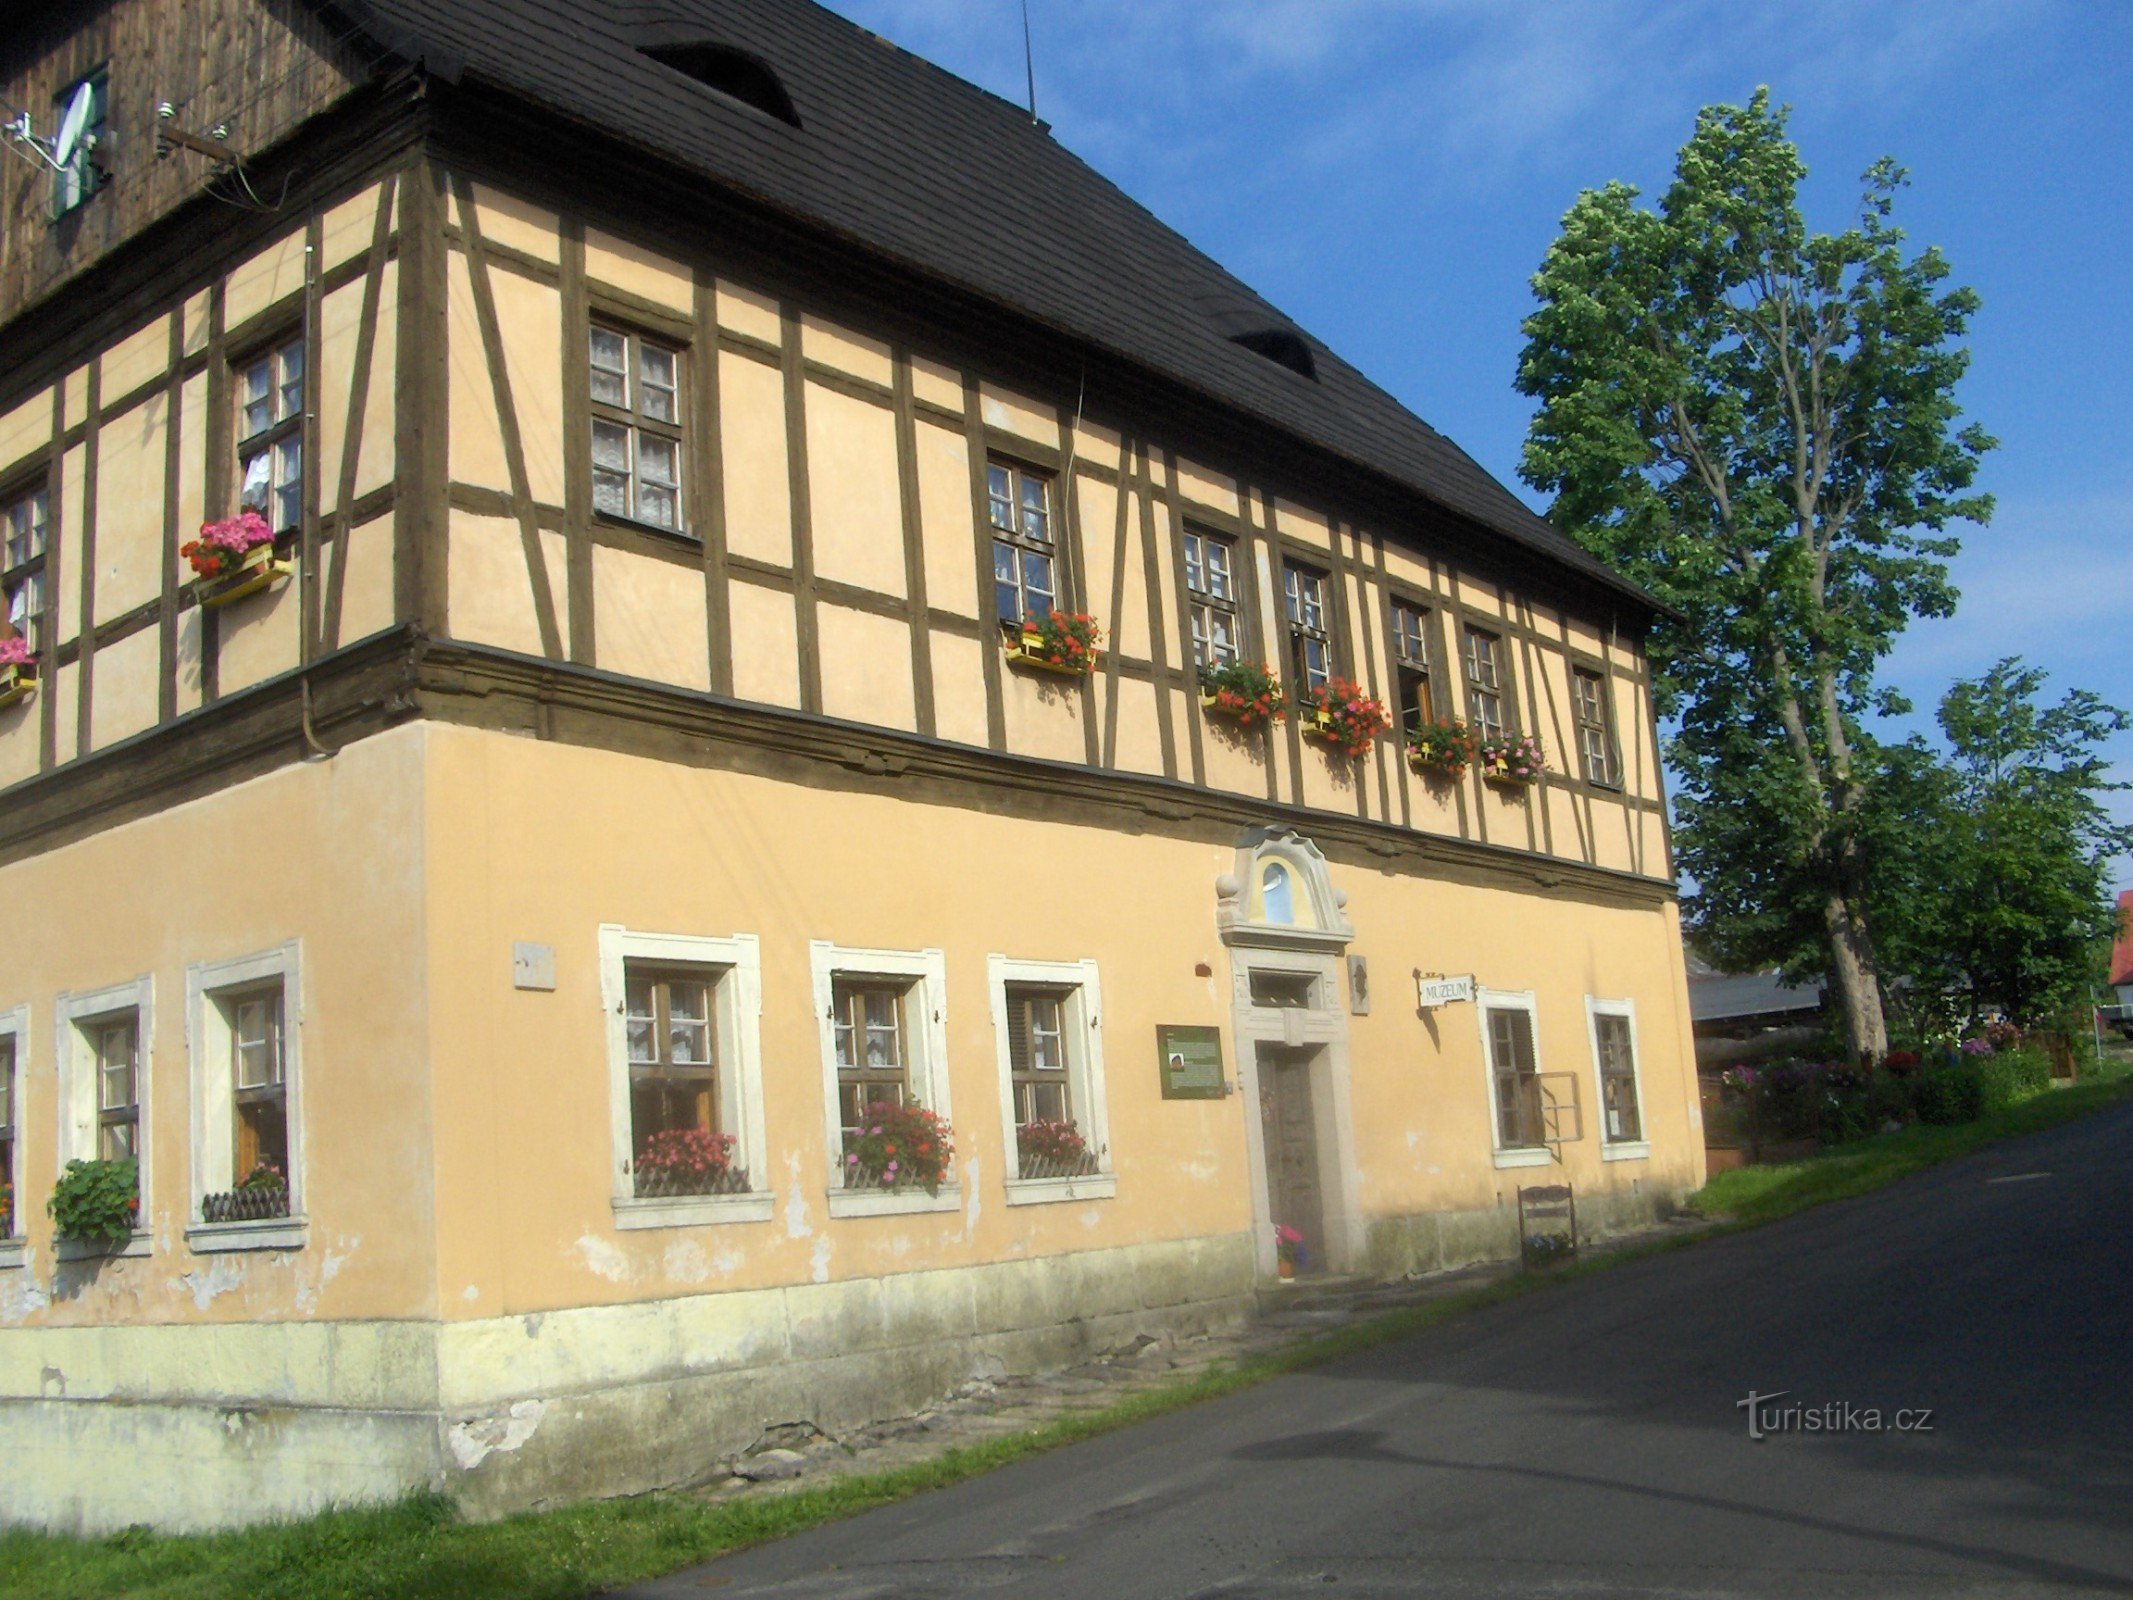 Zinnmuseum in Horní Blatná